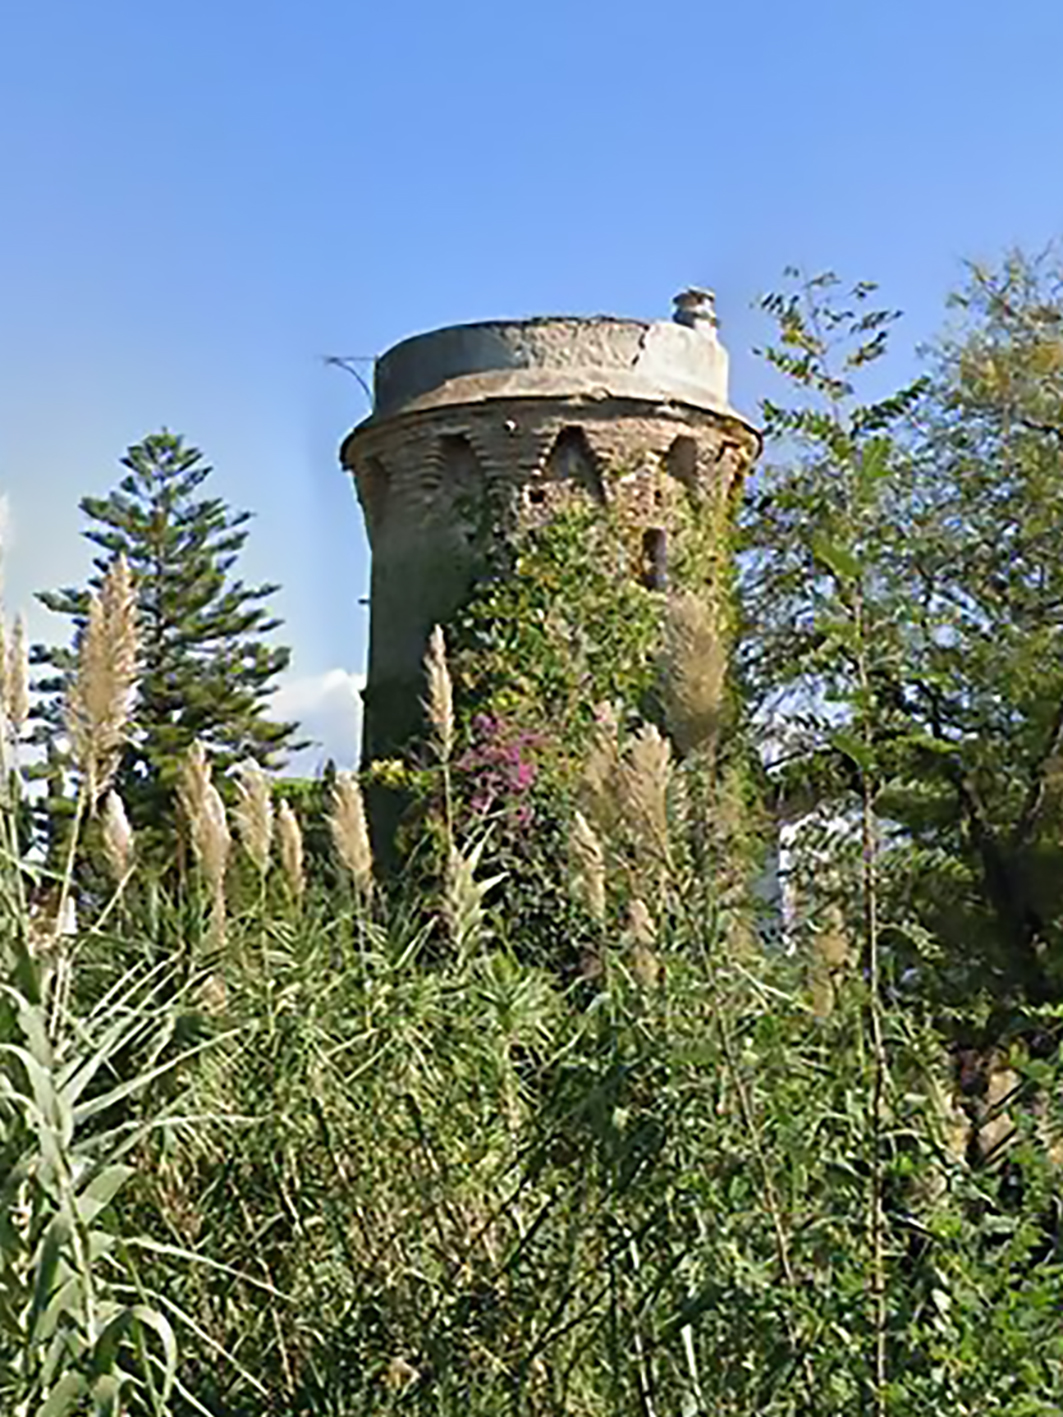 Torre costiera Kernot (torre, di avvistamento) - Capaccio Paestum (SA) 